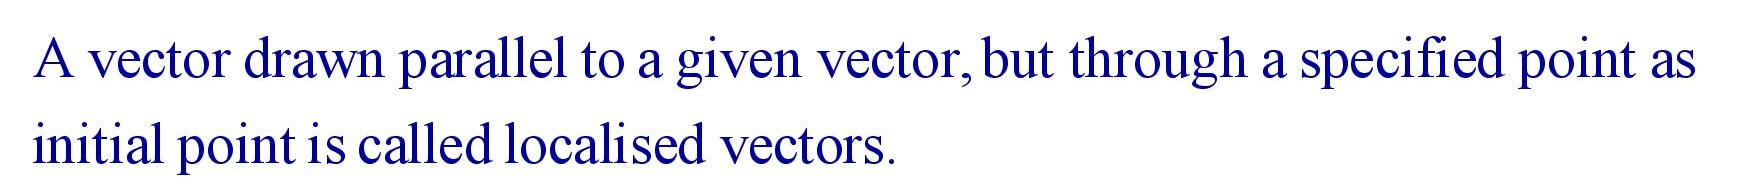 Localised Vectors